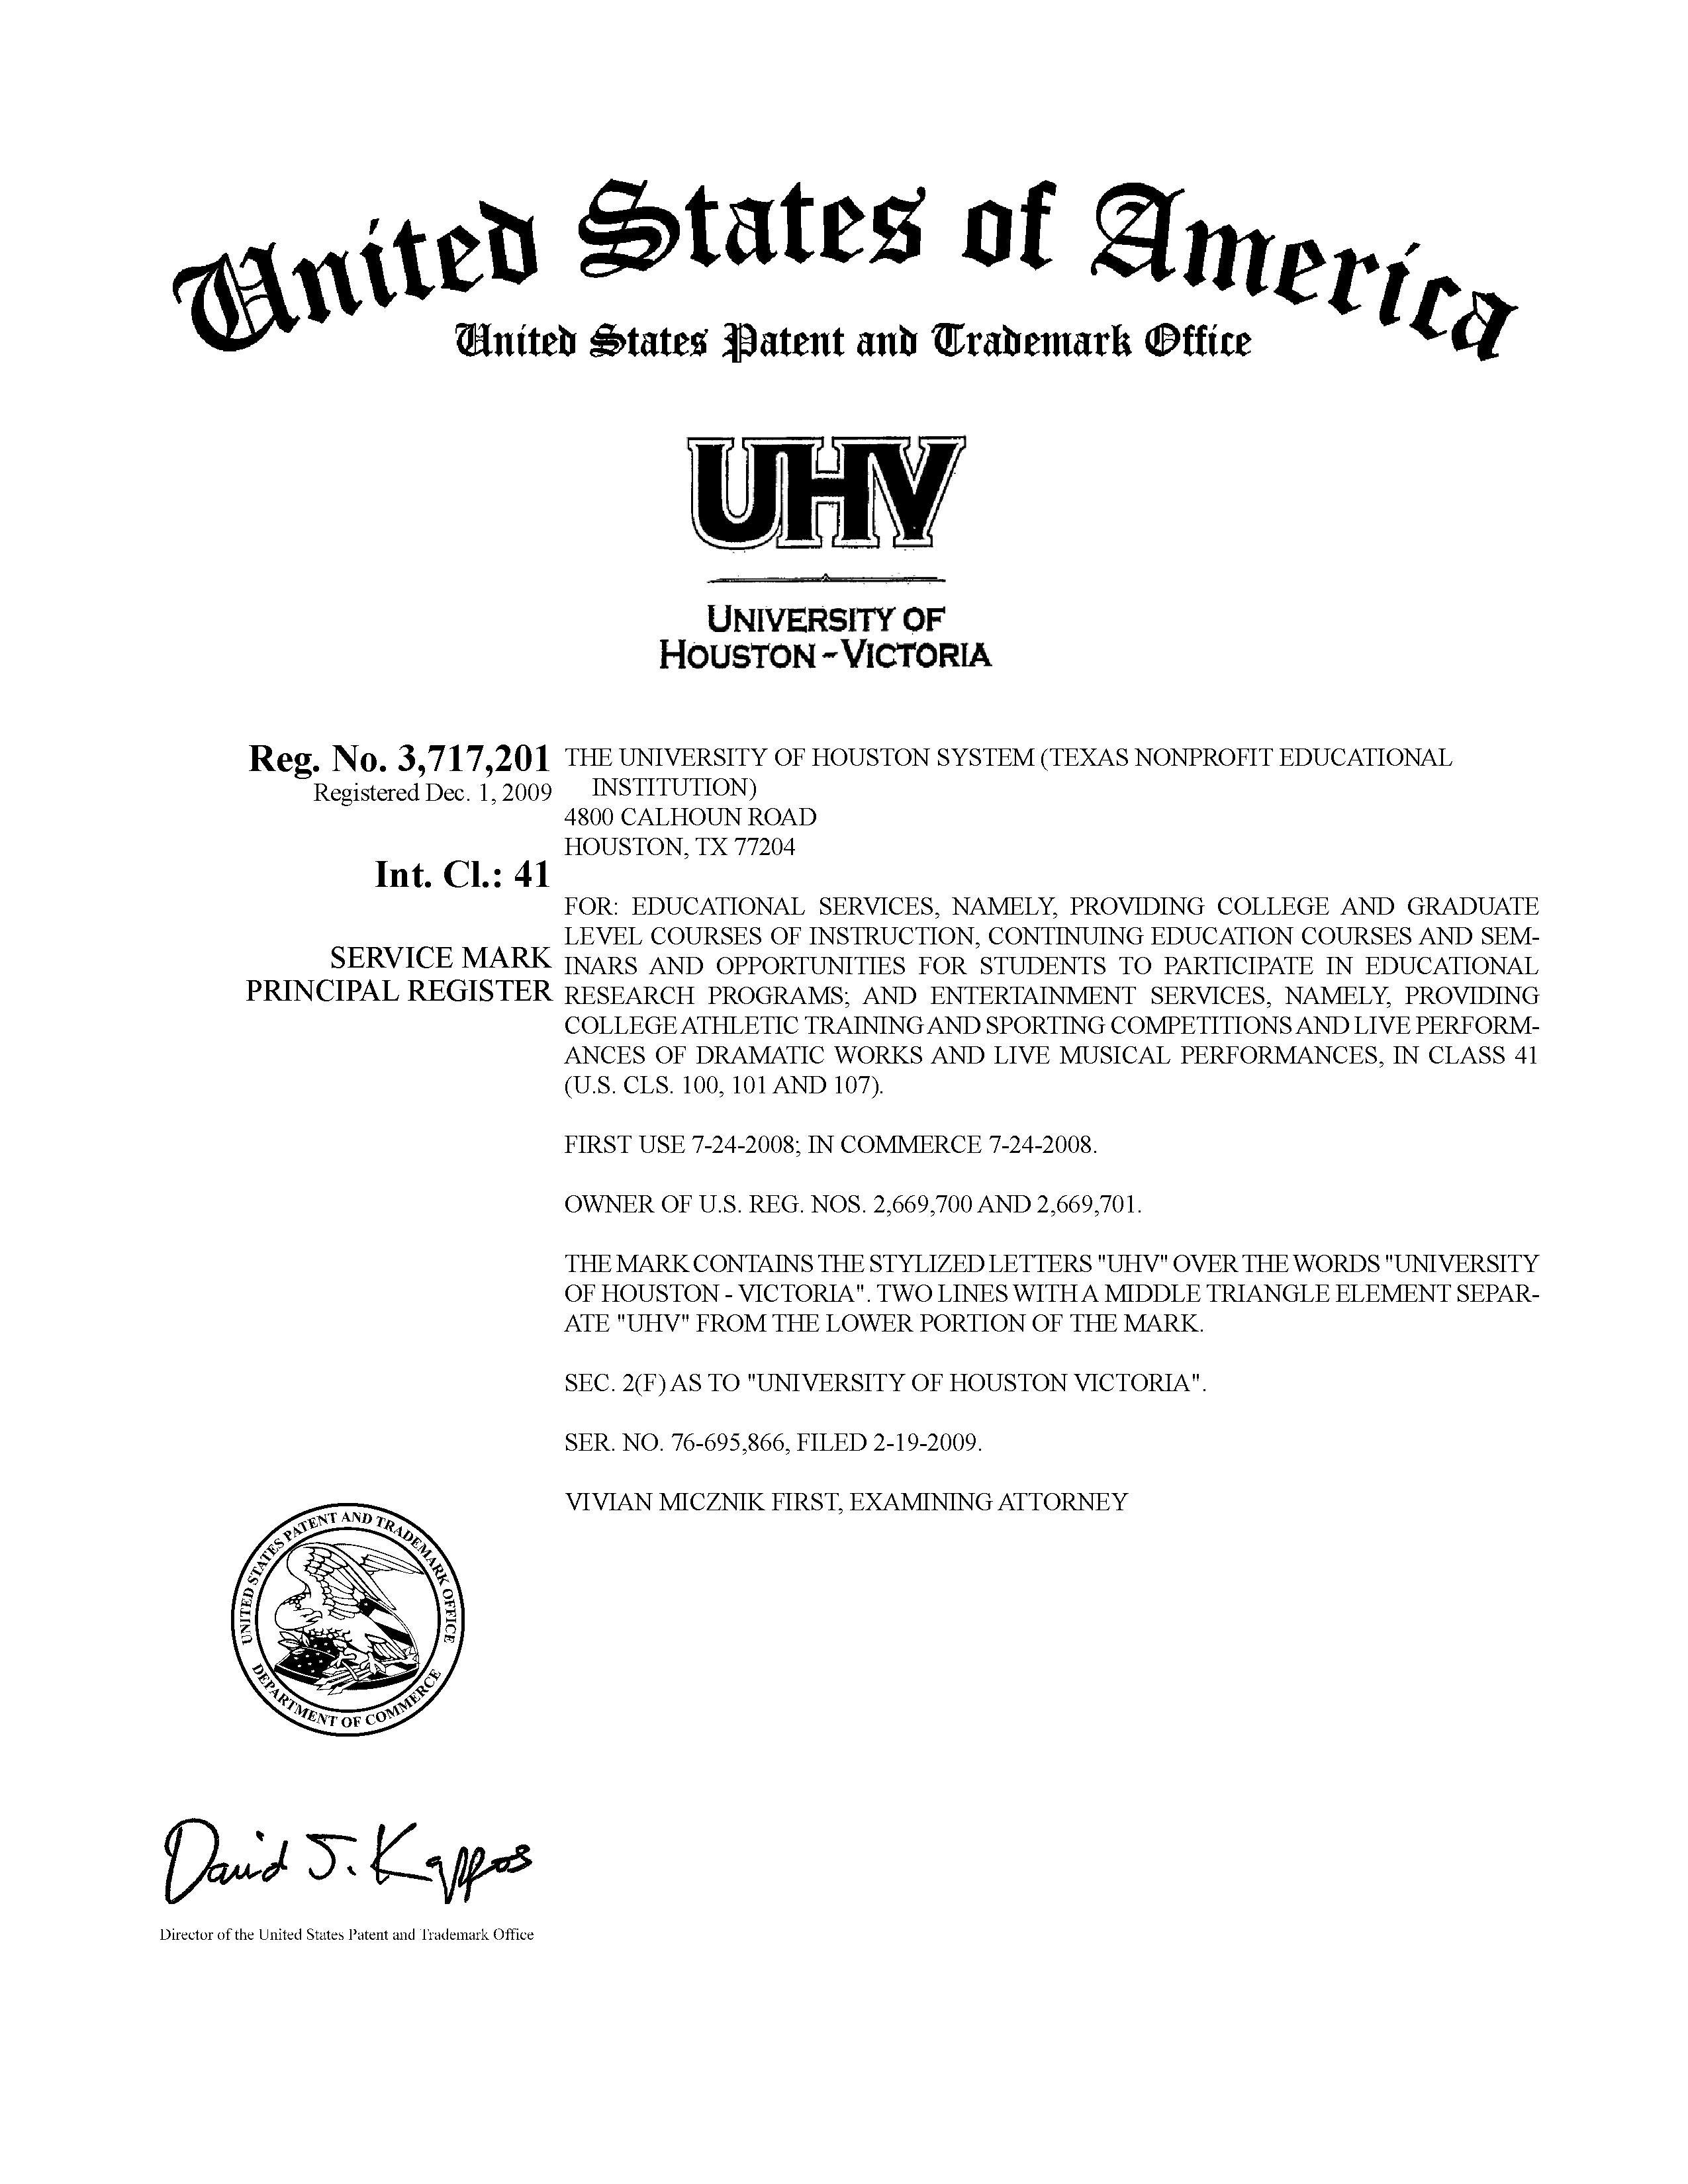 Registration Certificate for Uhv University Of Houston Victoria